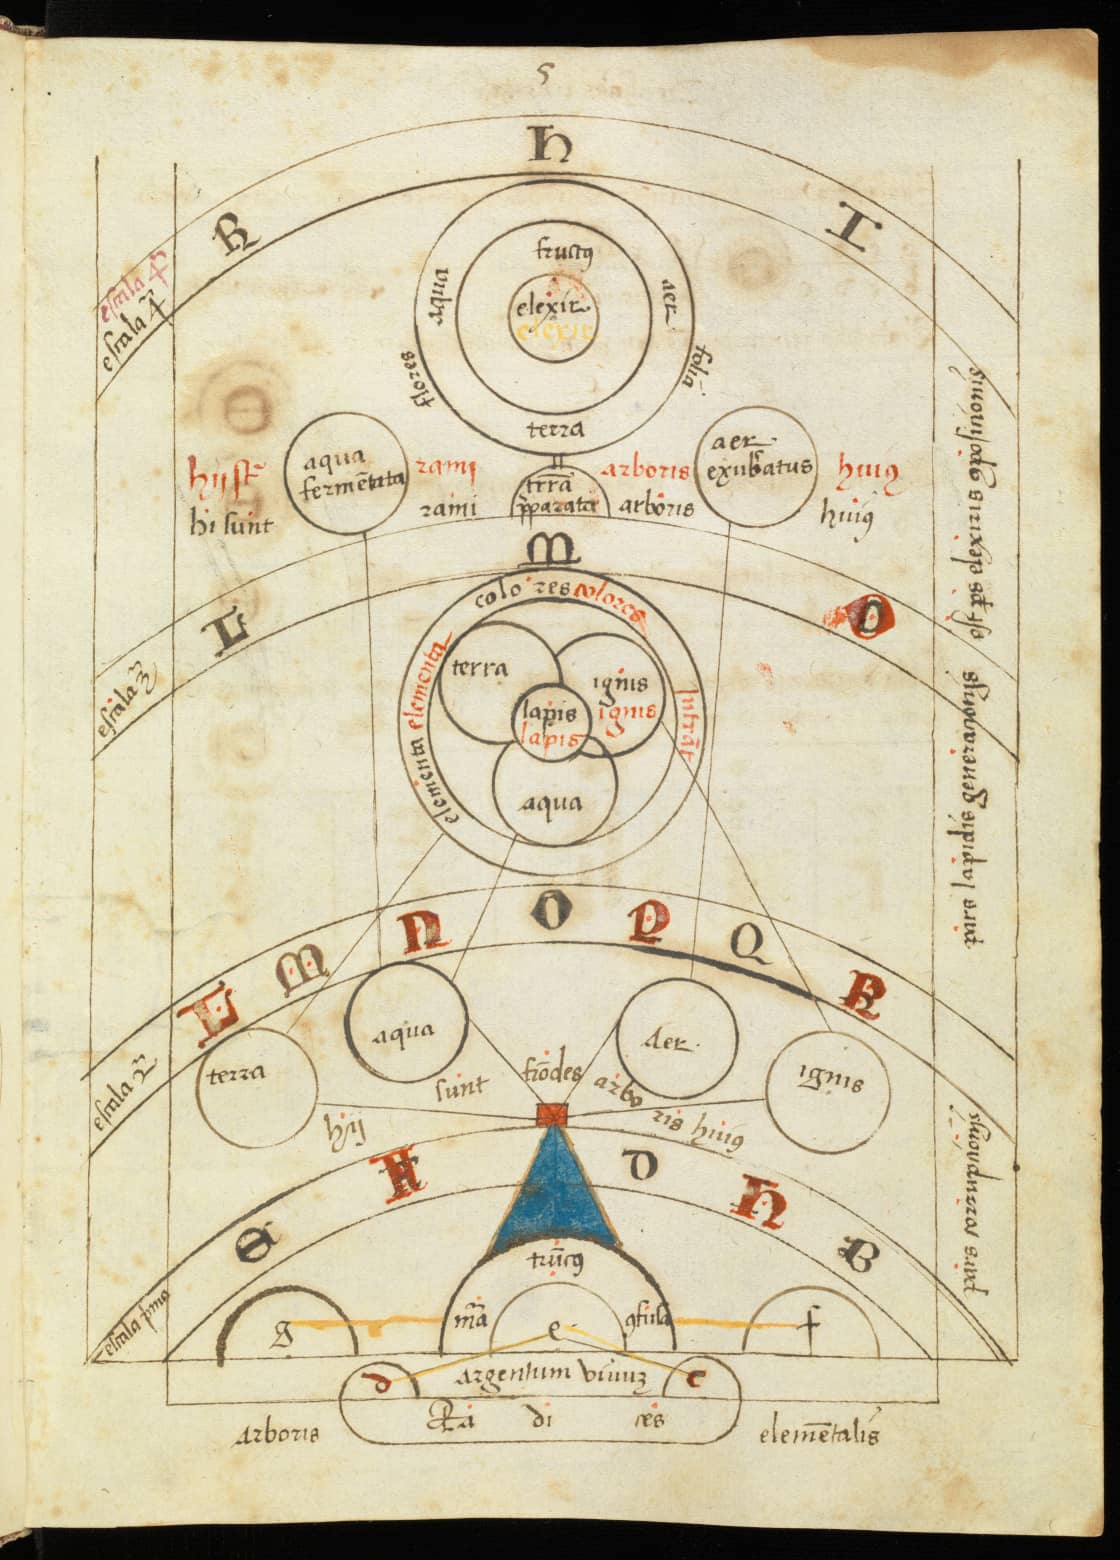 St. Gallen, Kantonsbibliothek, Vadianische Sammlung, VadSlg Ms. 391, f. 5r – Ps.-Raimundus Lullus